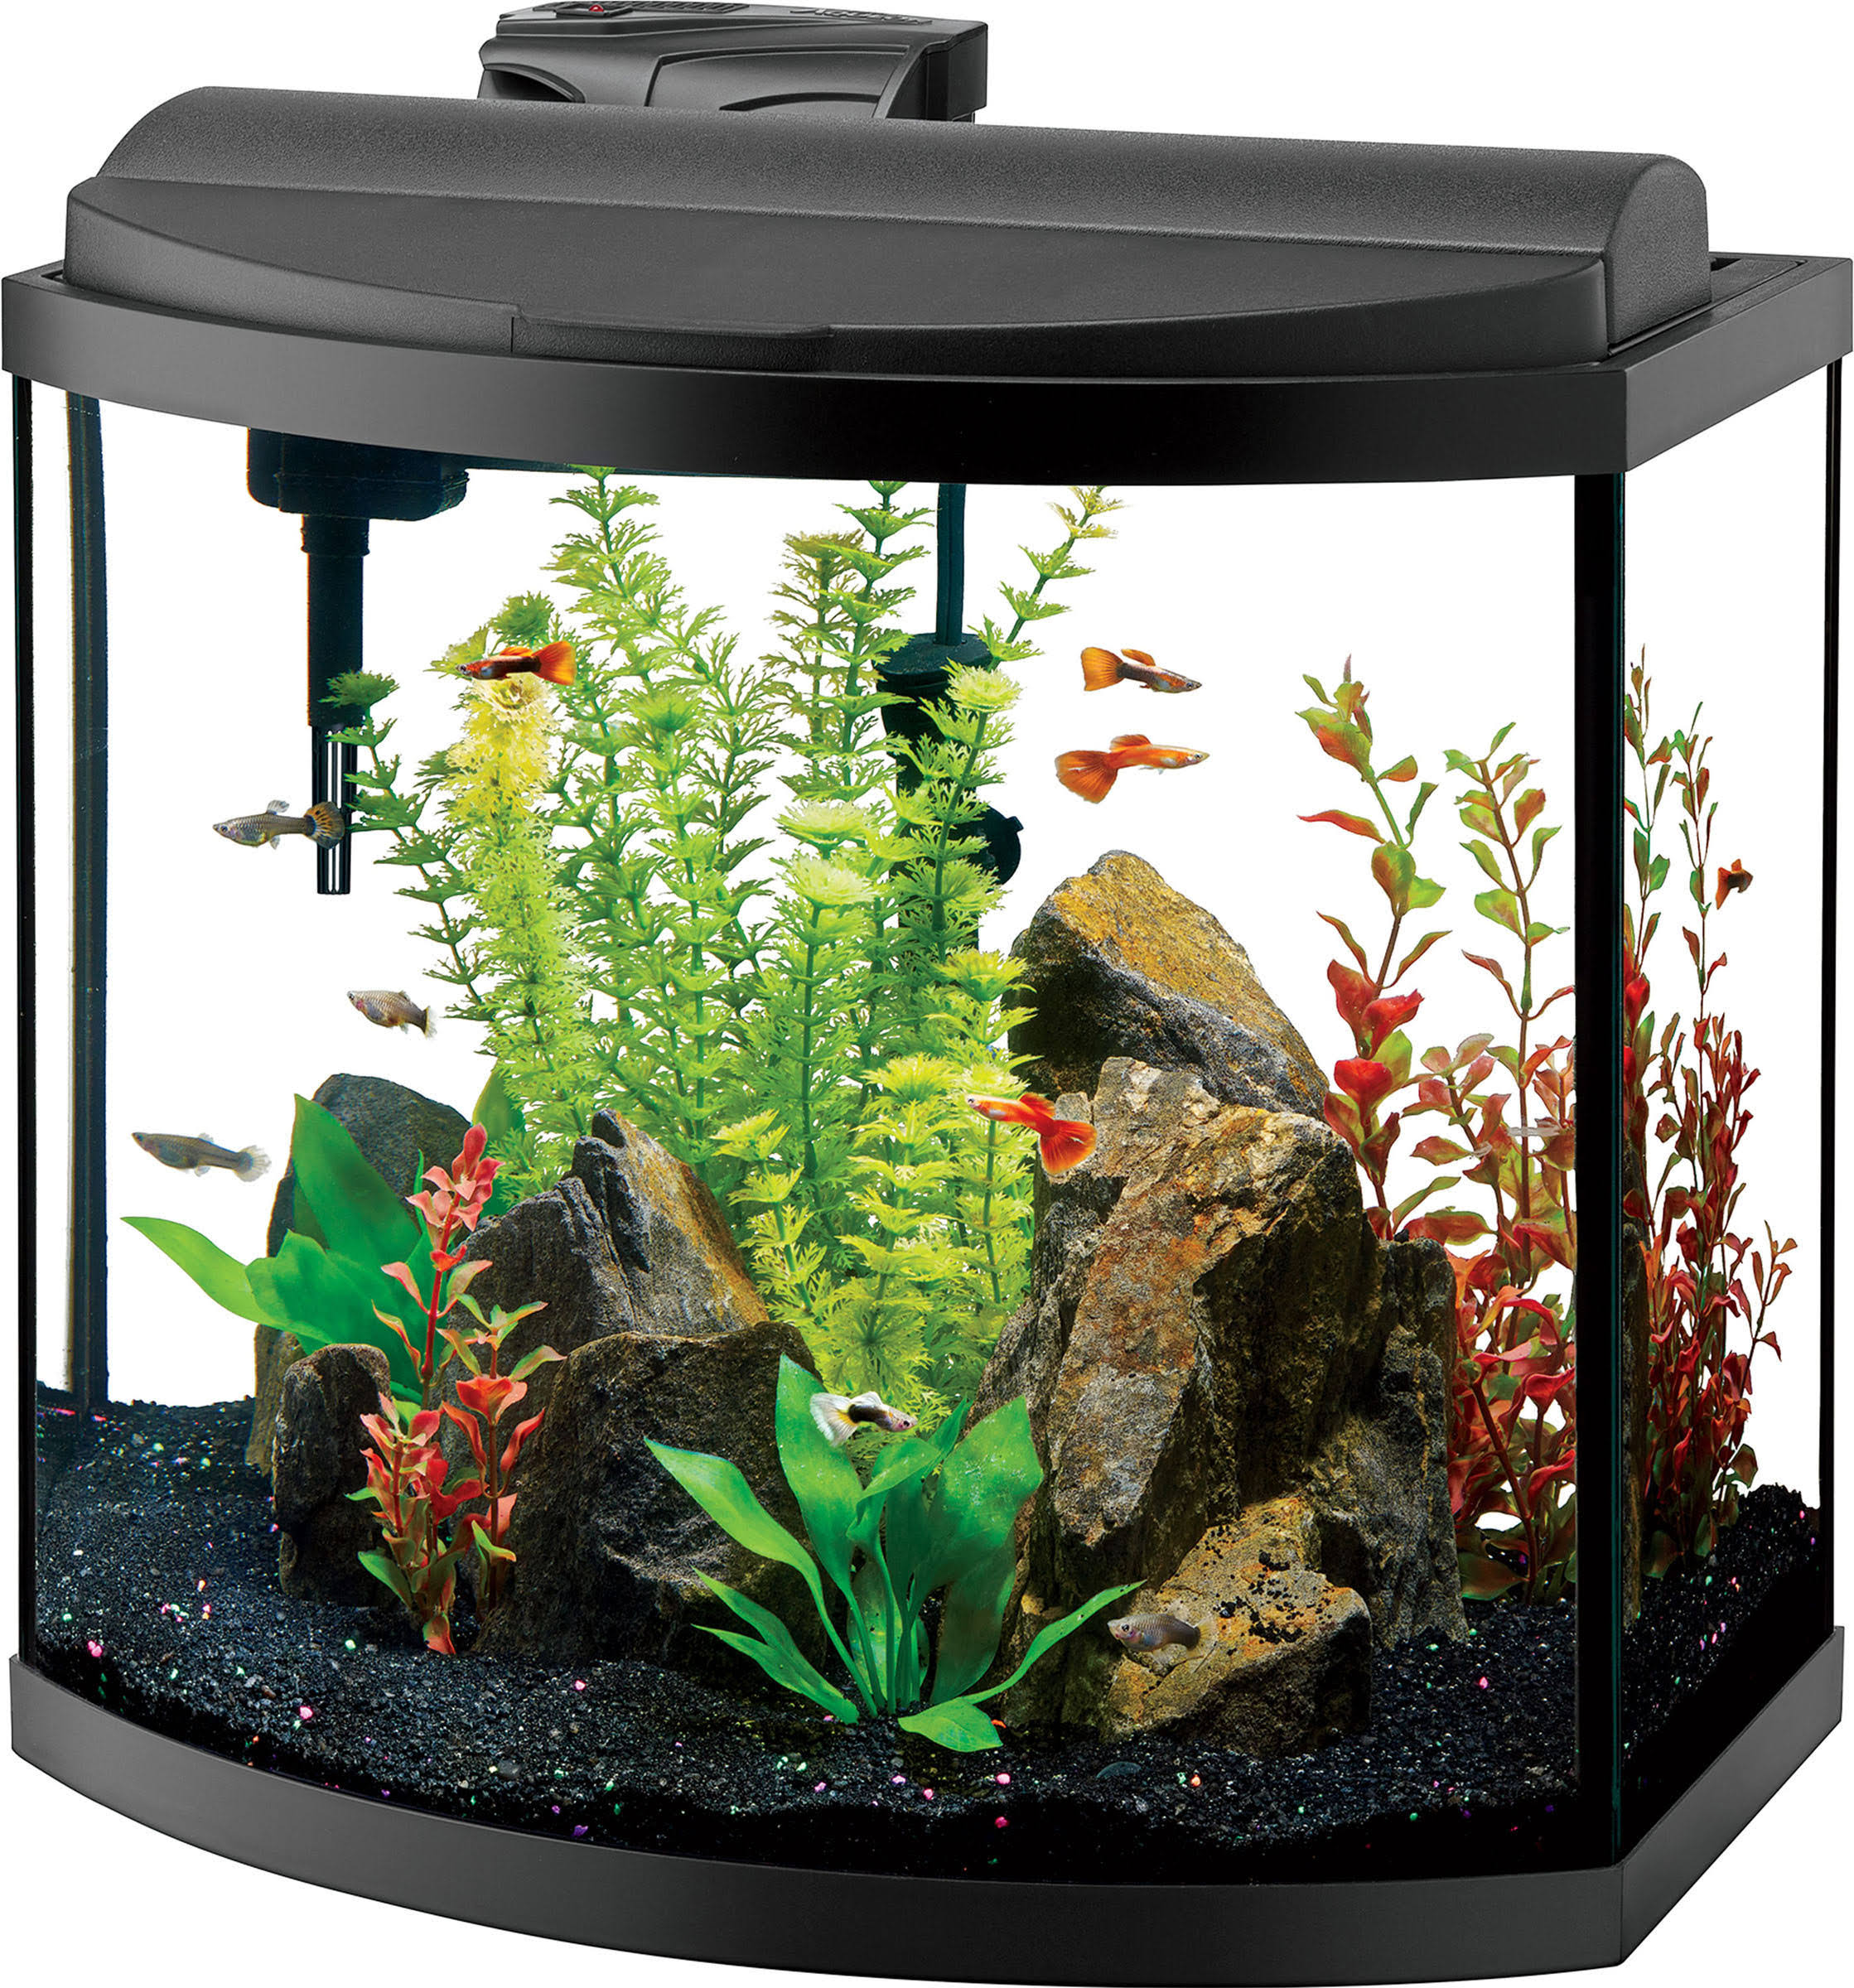 Aqueon Deluxe LED Bow Front Aquarium Kit - Black, 16gal